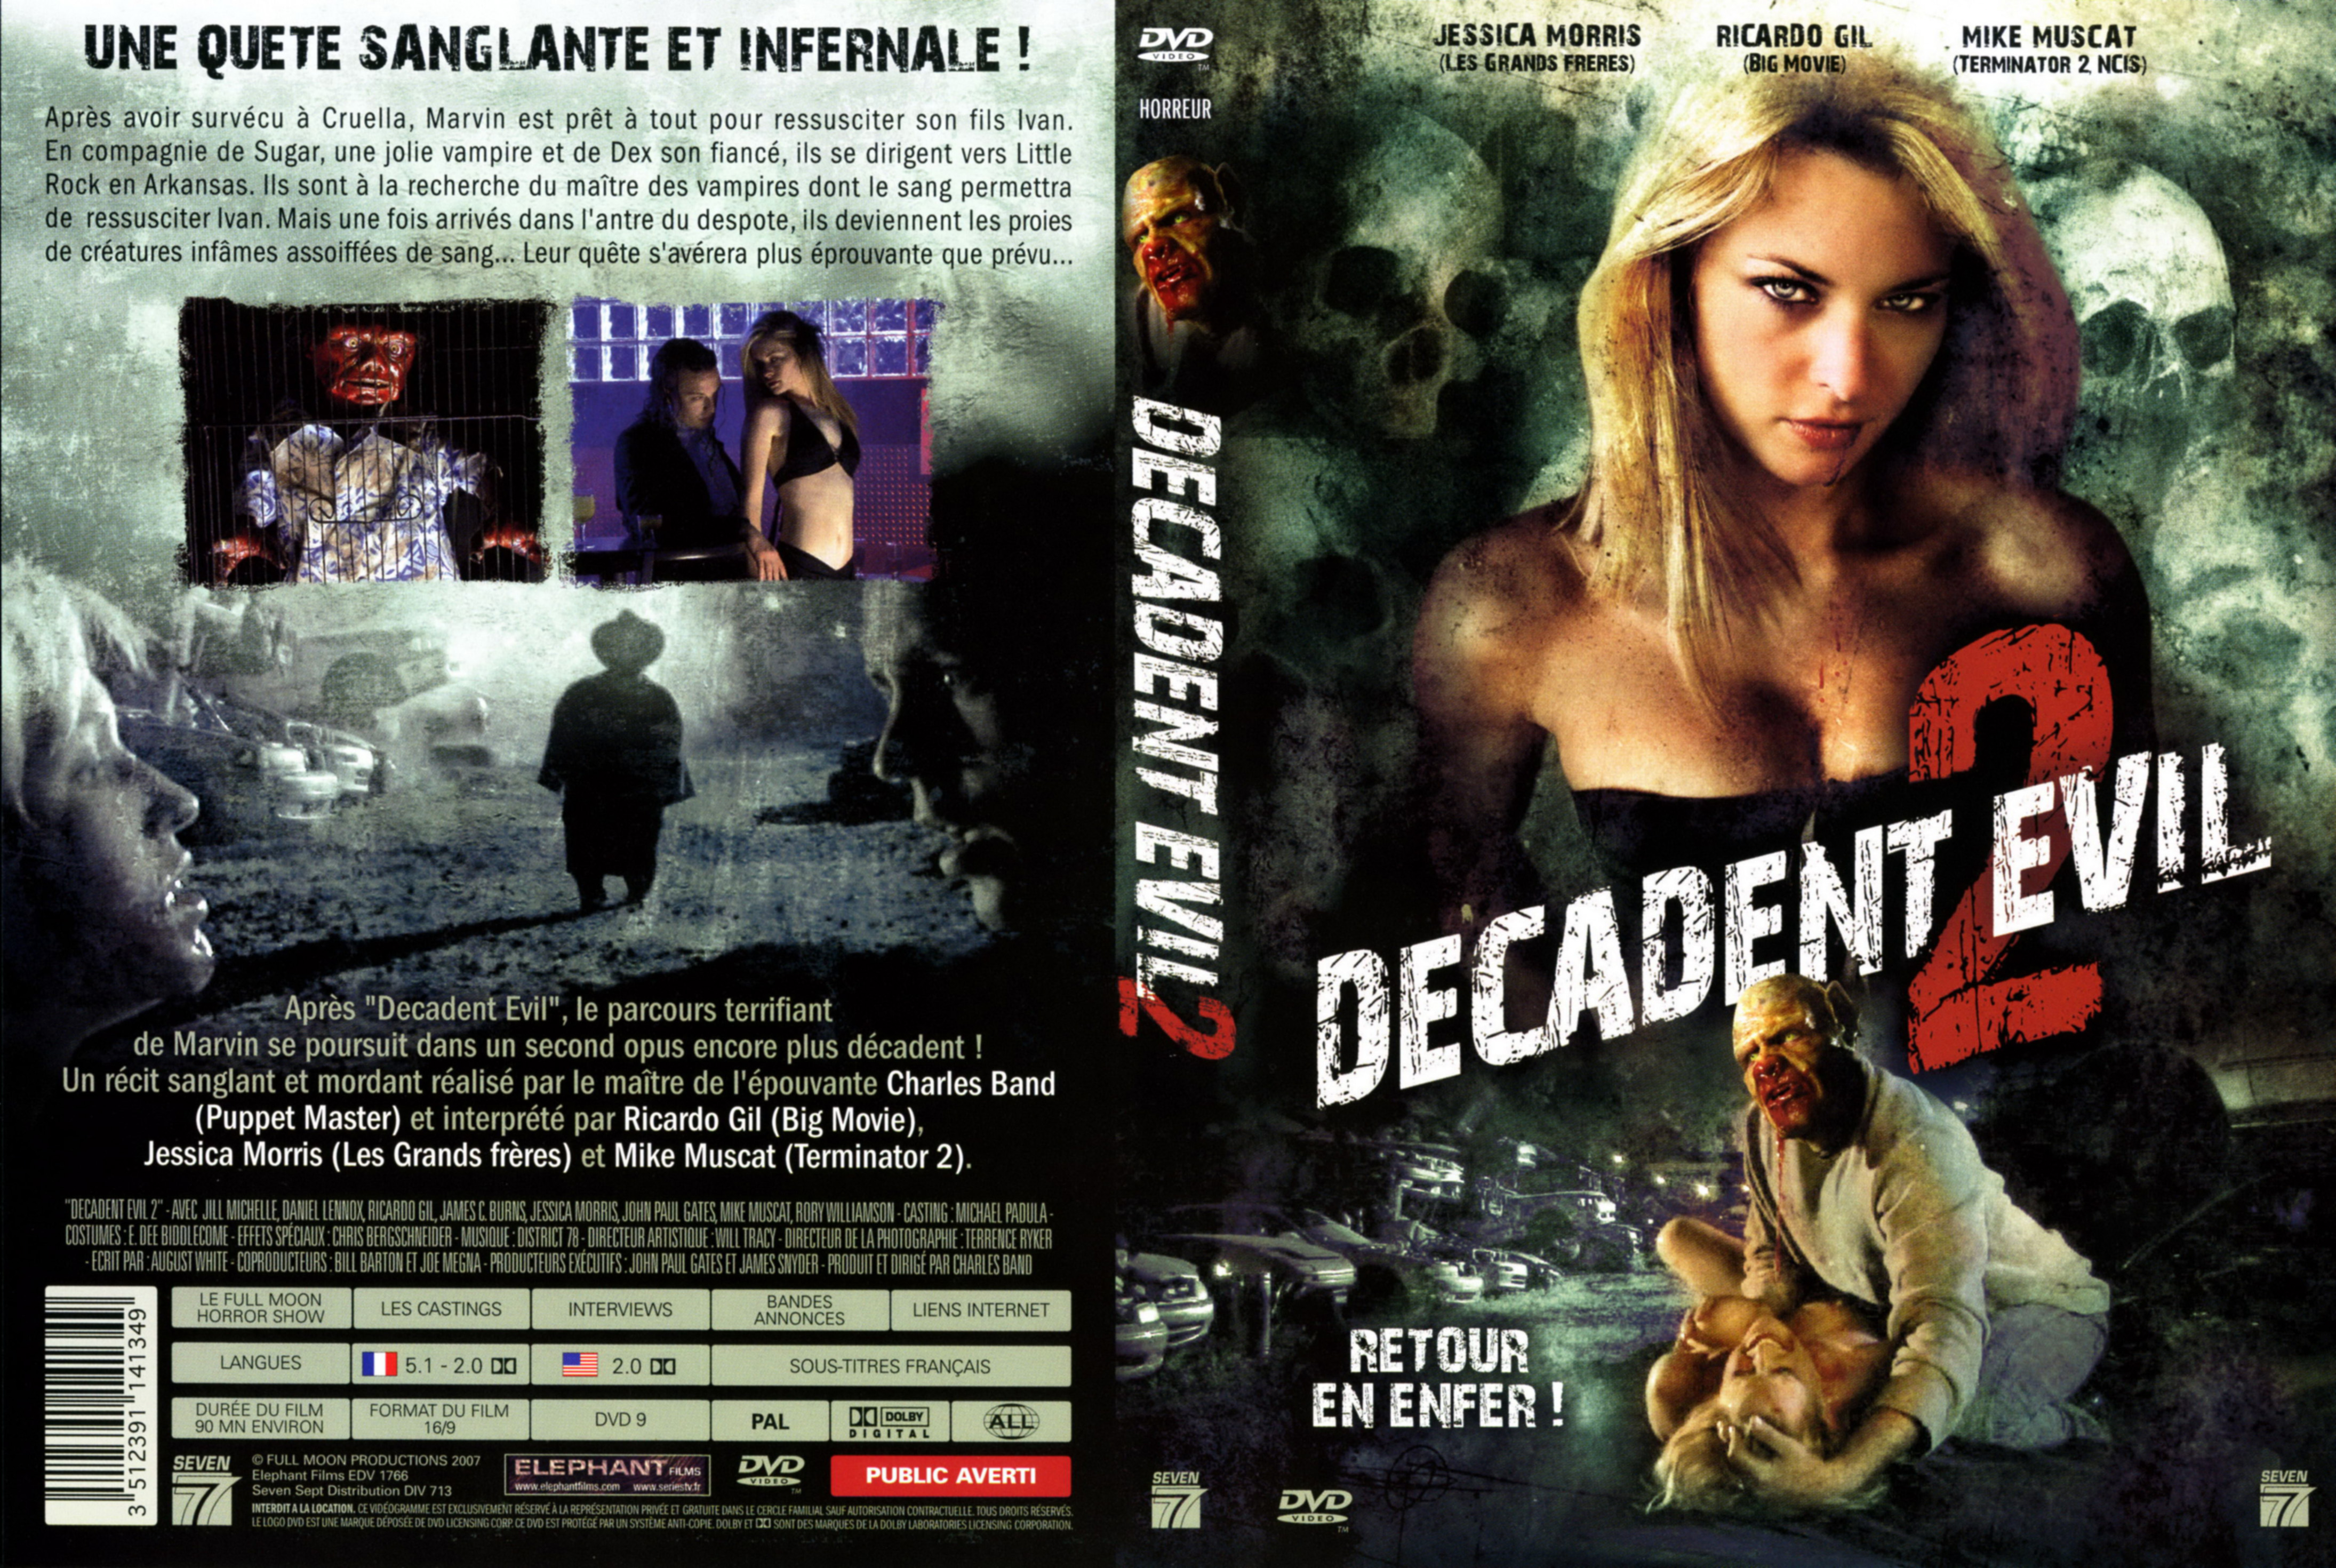 Jaquette DVD Decadent evil 2